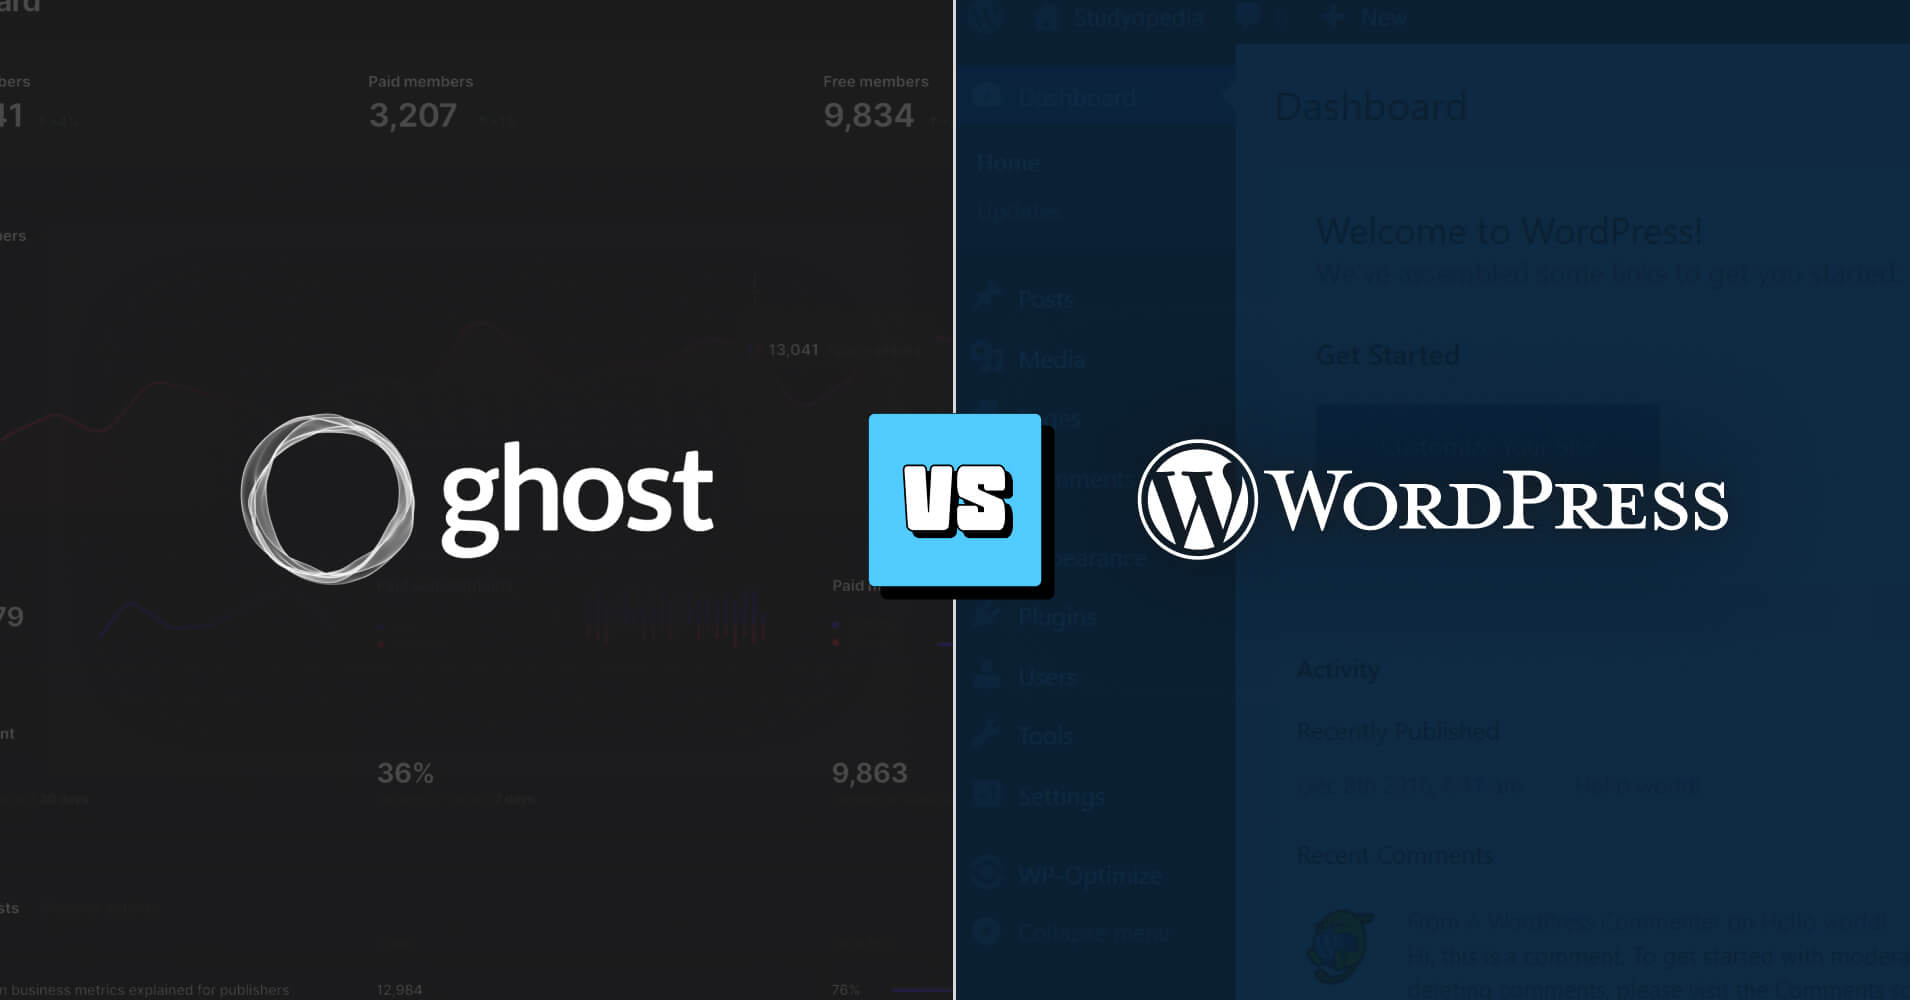 Ghost vs WordPress